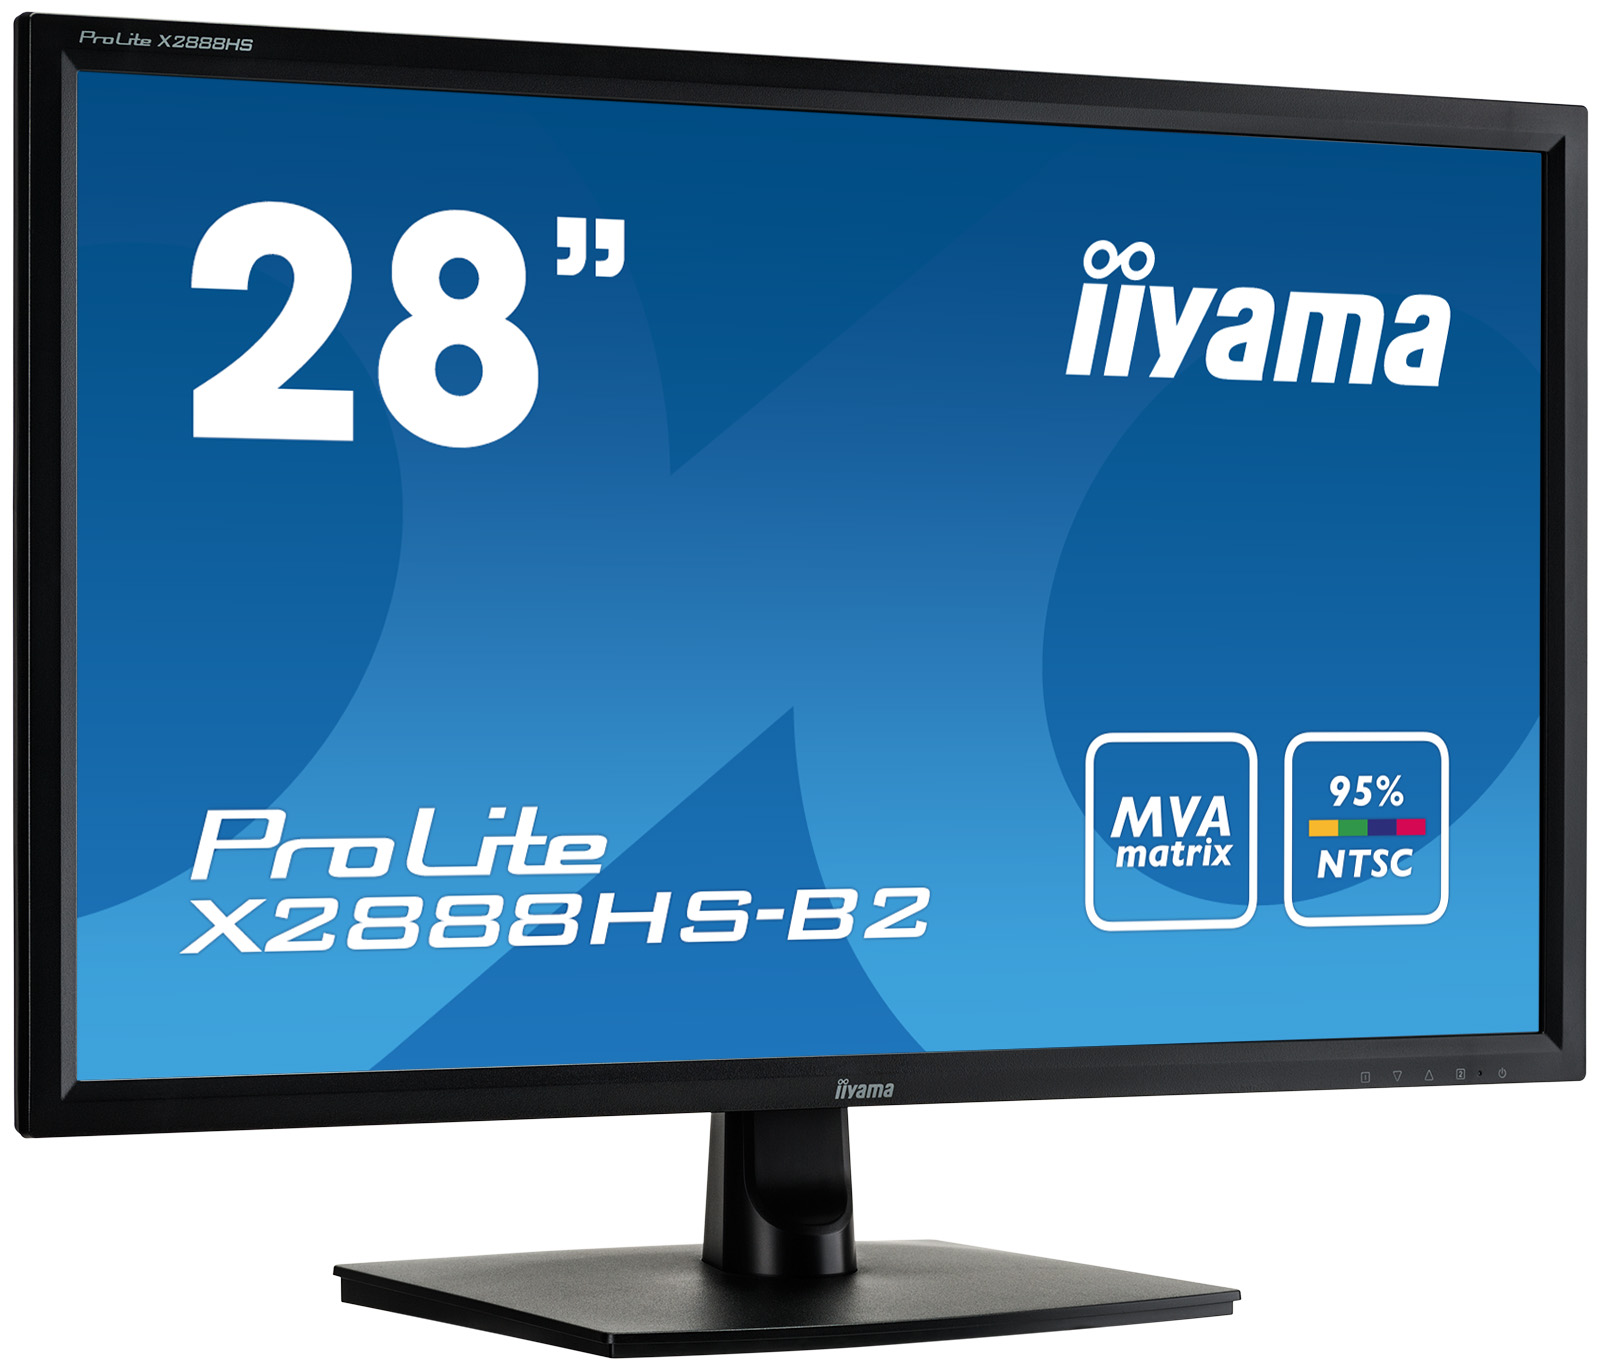 iiyama - ProLite X2888HS-B2 High-colour gamut 28” screen perfect 